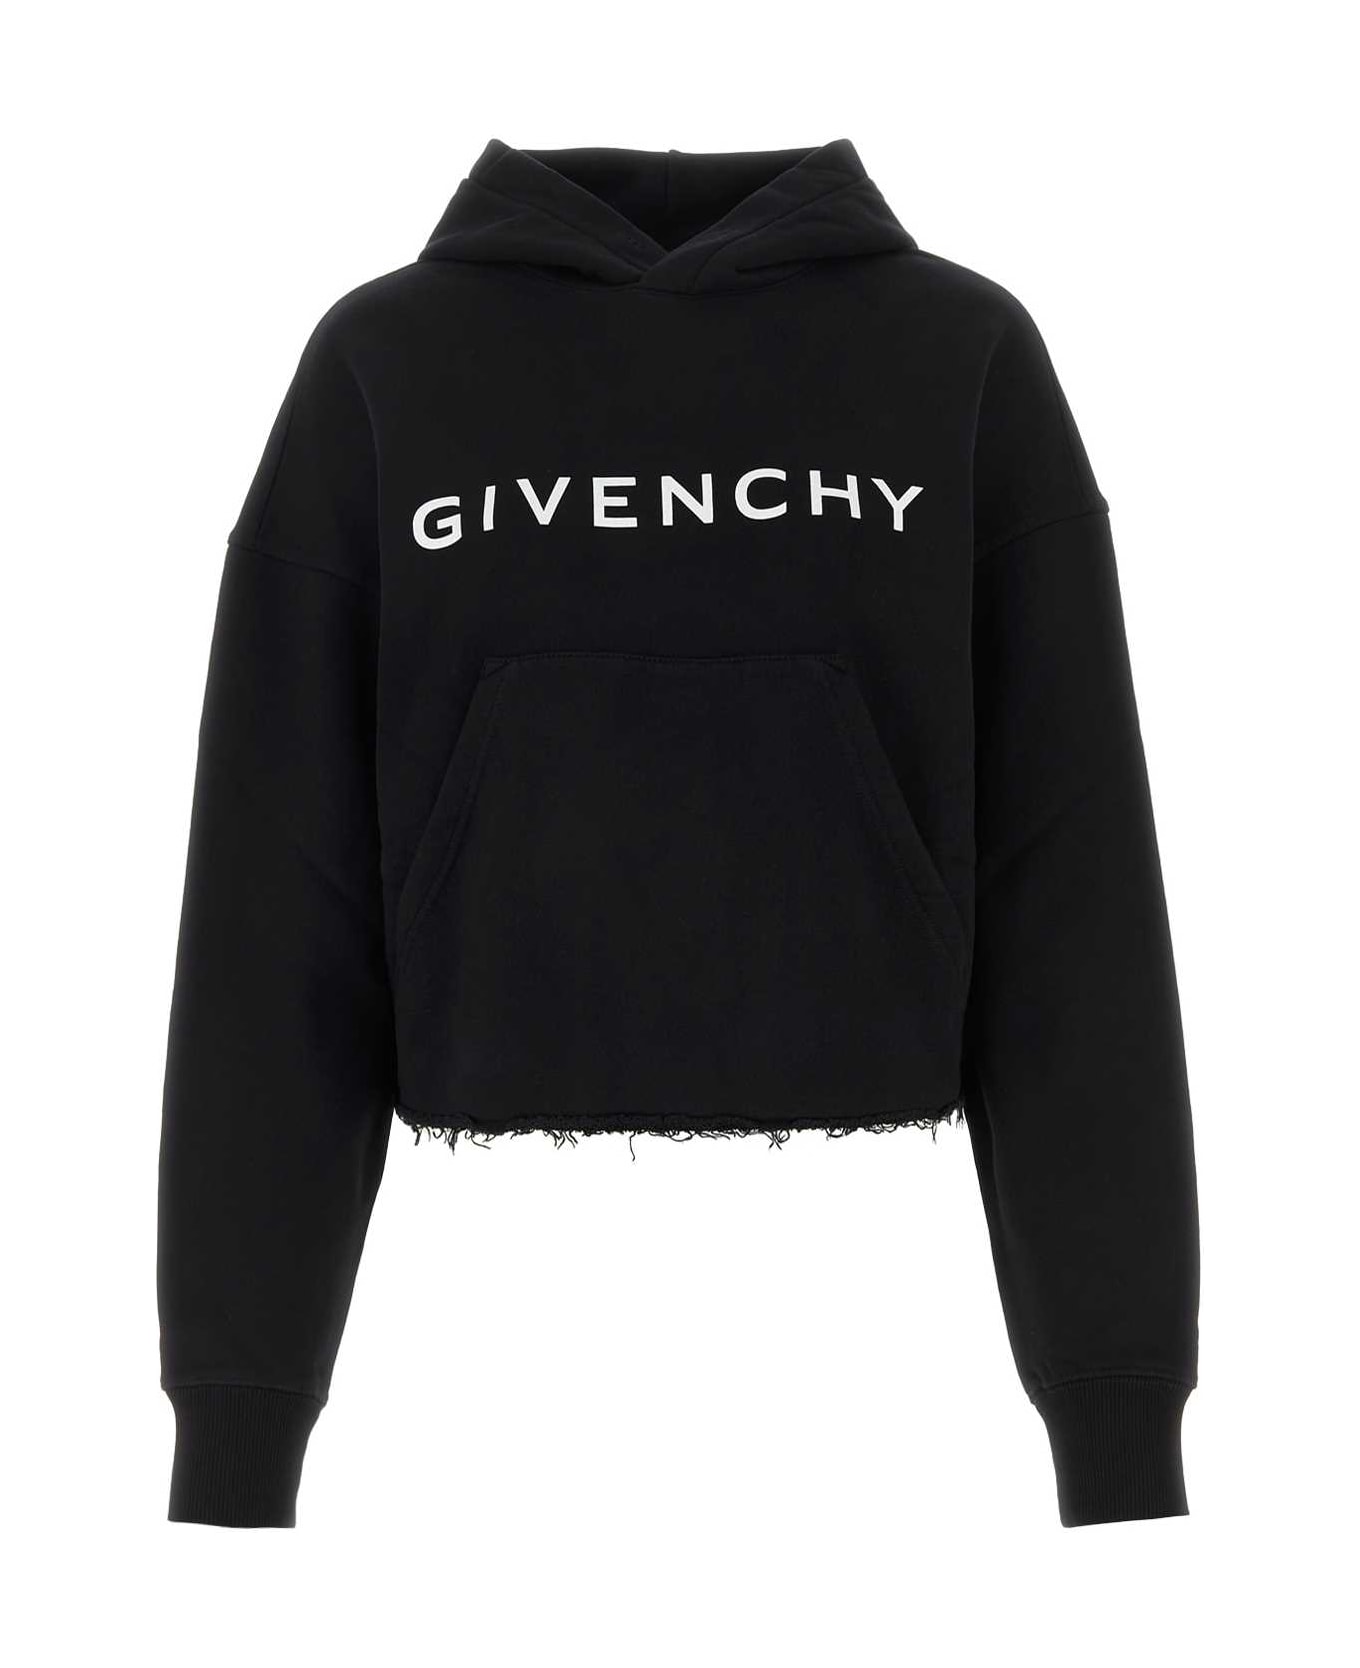 Givenchy Black Cotton Sweatshirt - 001